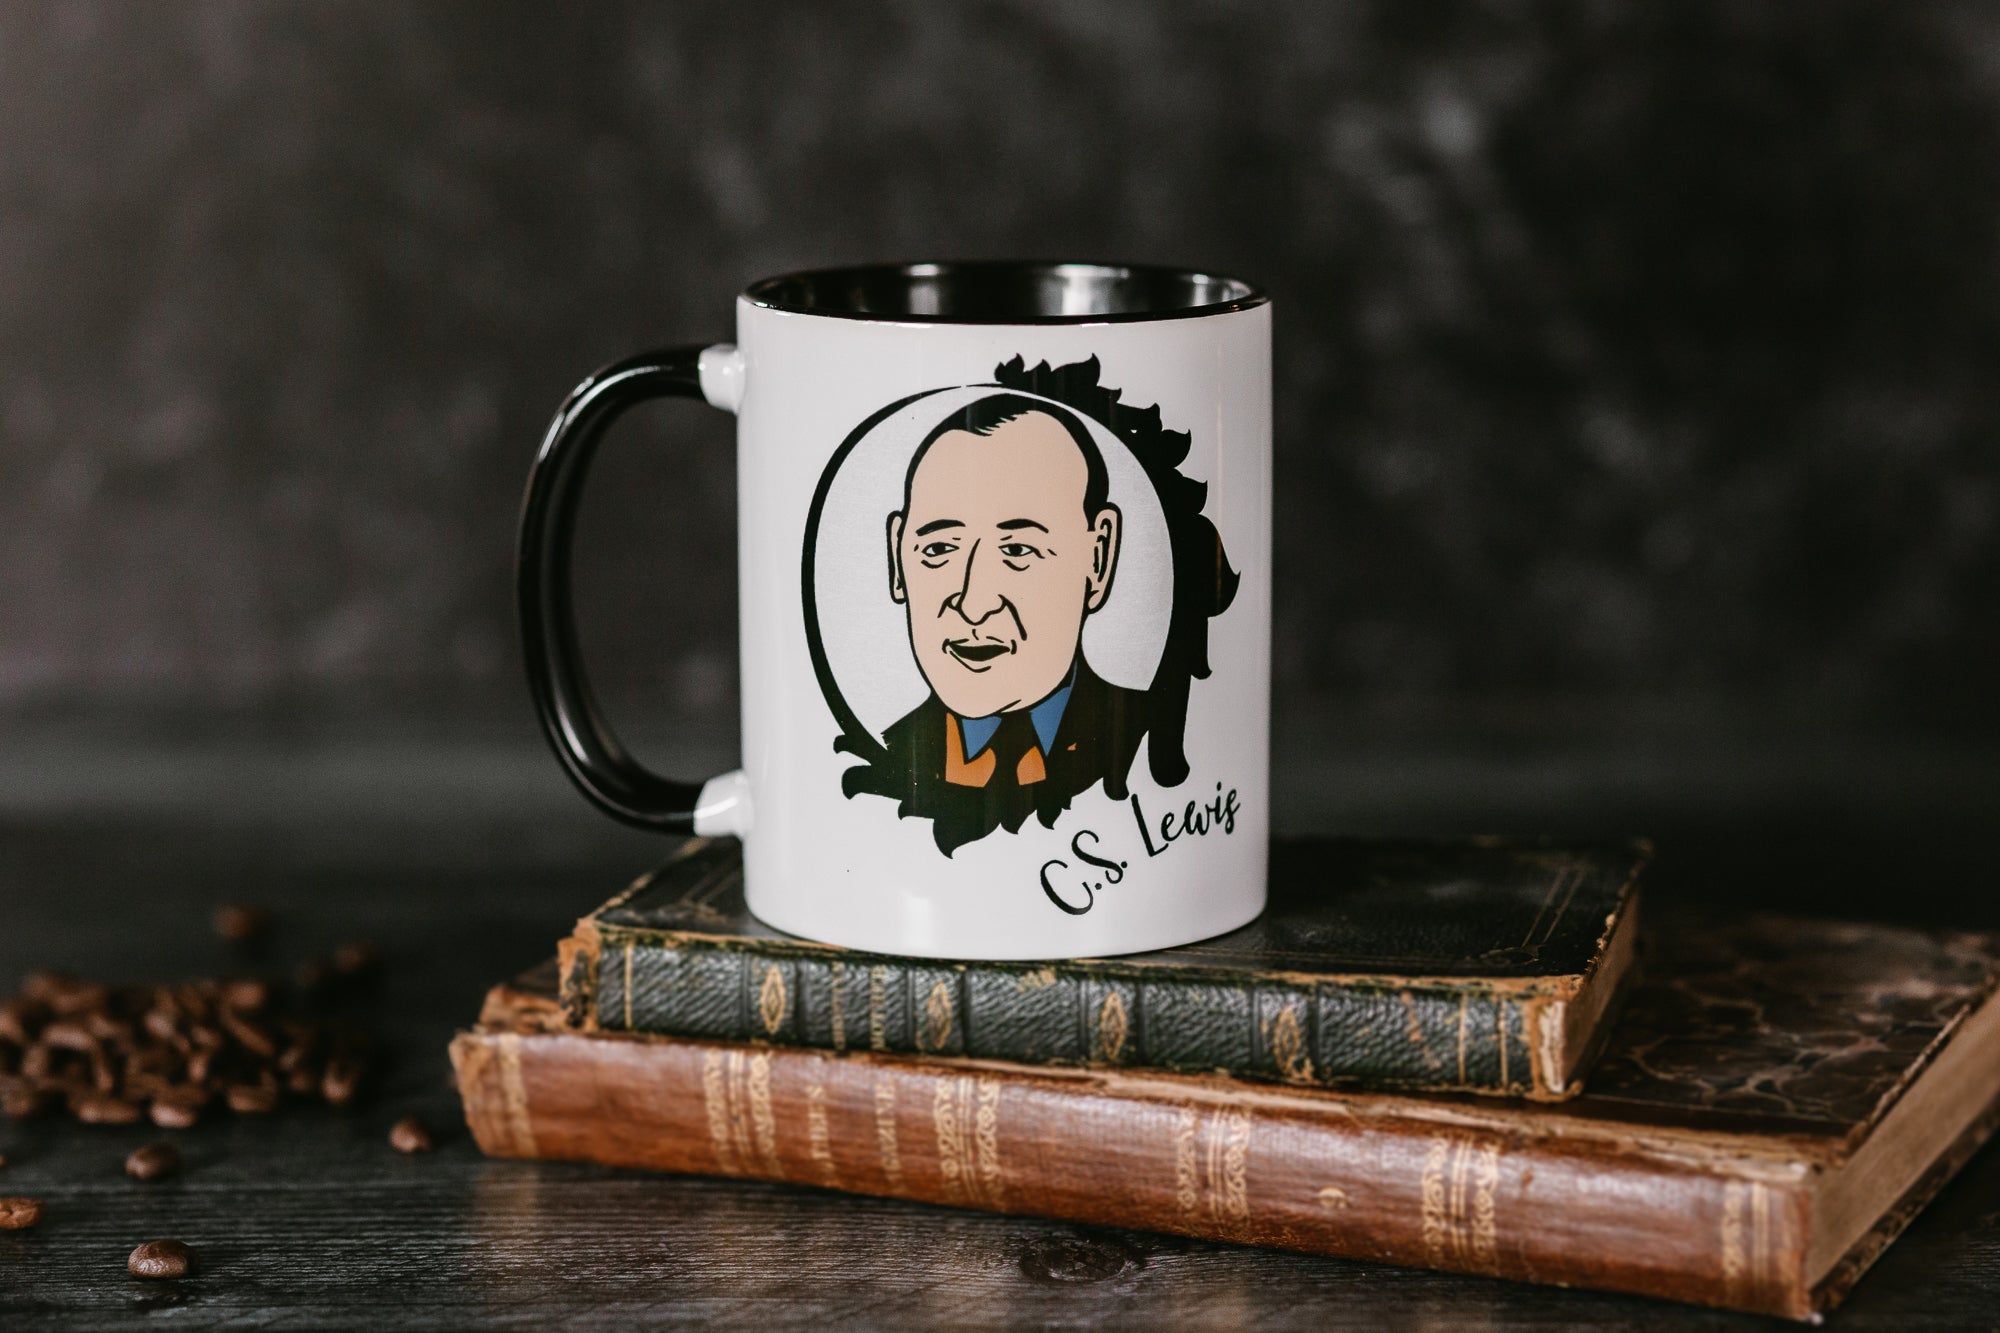 The C.S. Lewis Coffee Mug